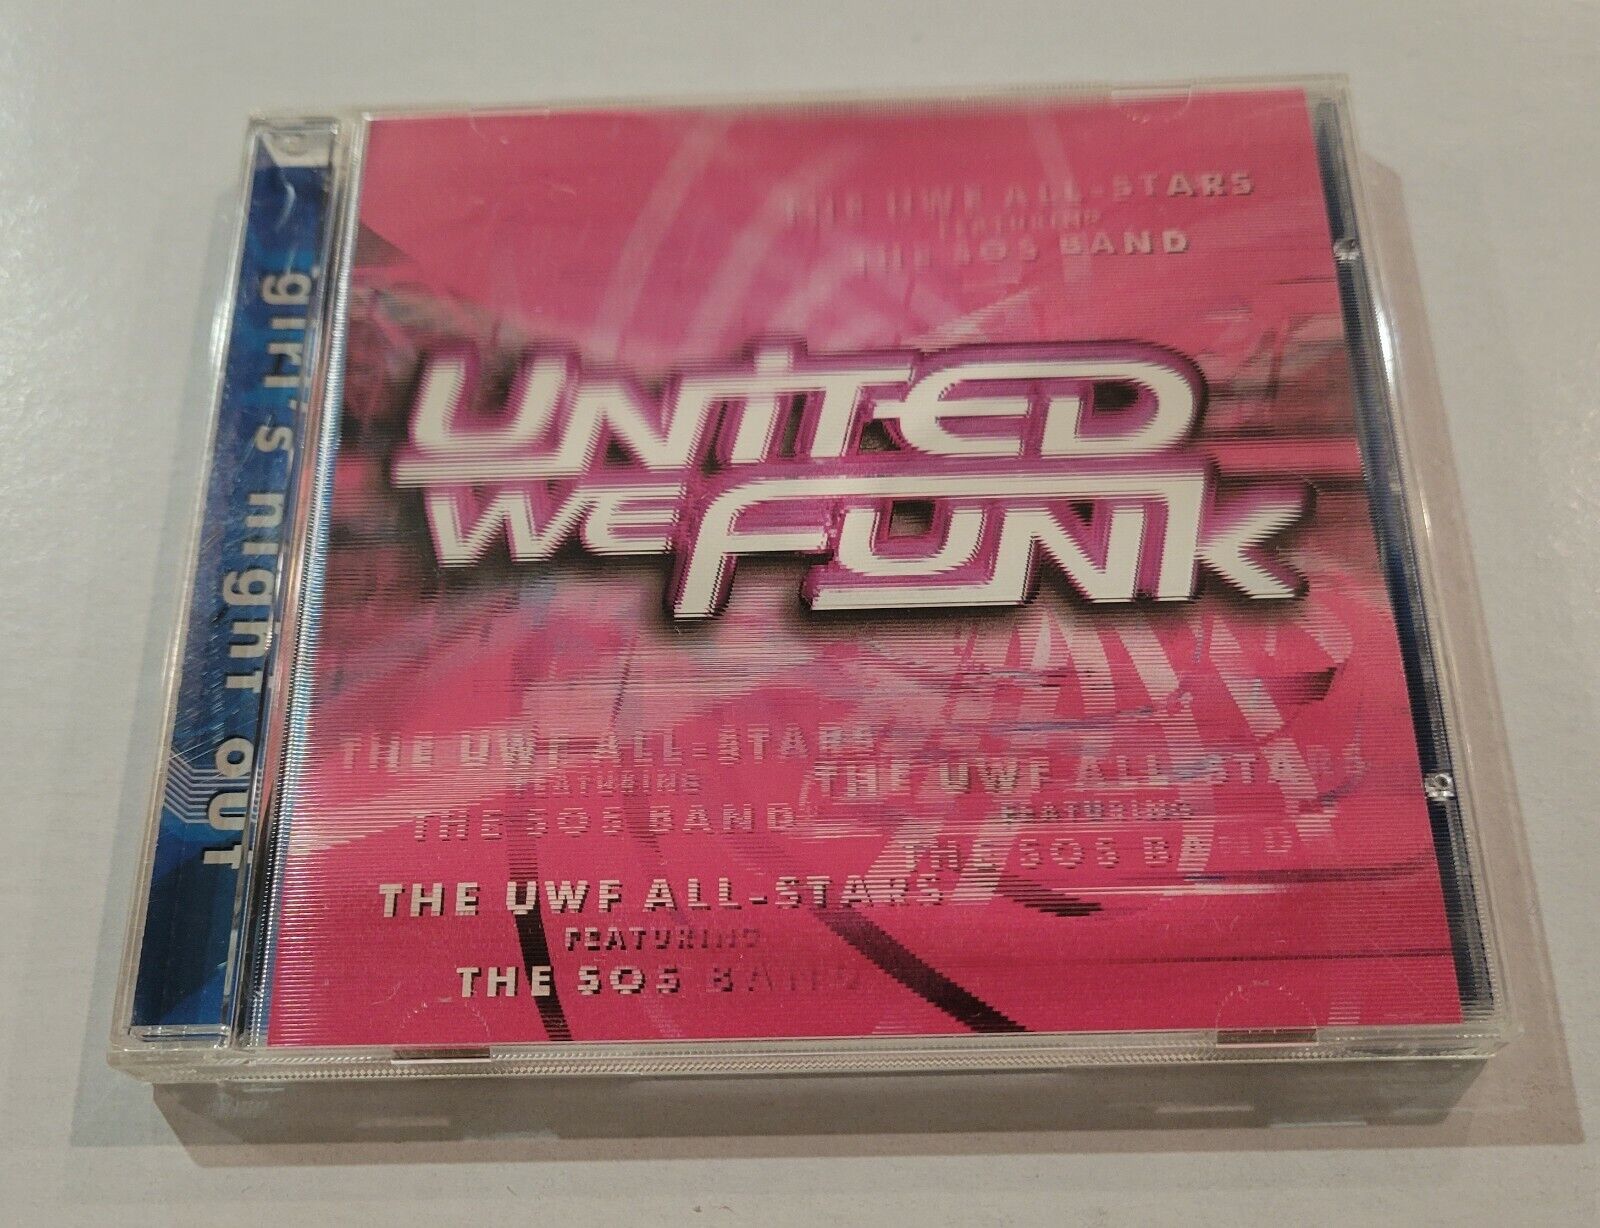 UNITED WE FUNK - S.O.S. Band - Girls Night Out - CD Single - 1999 Rhino